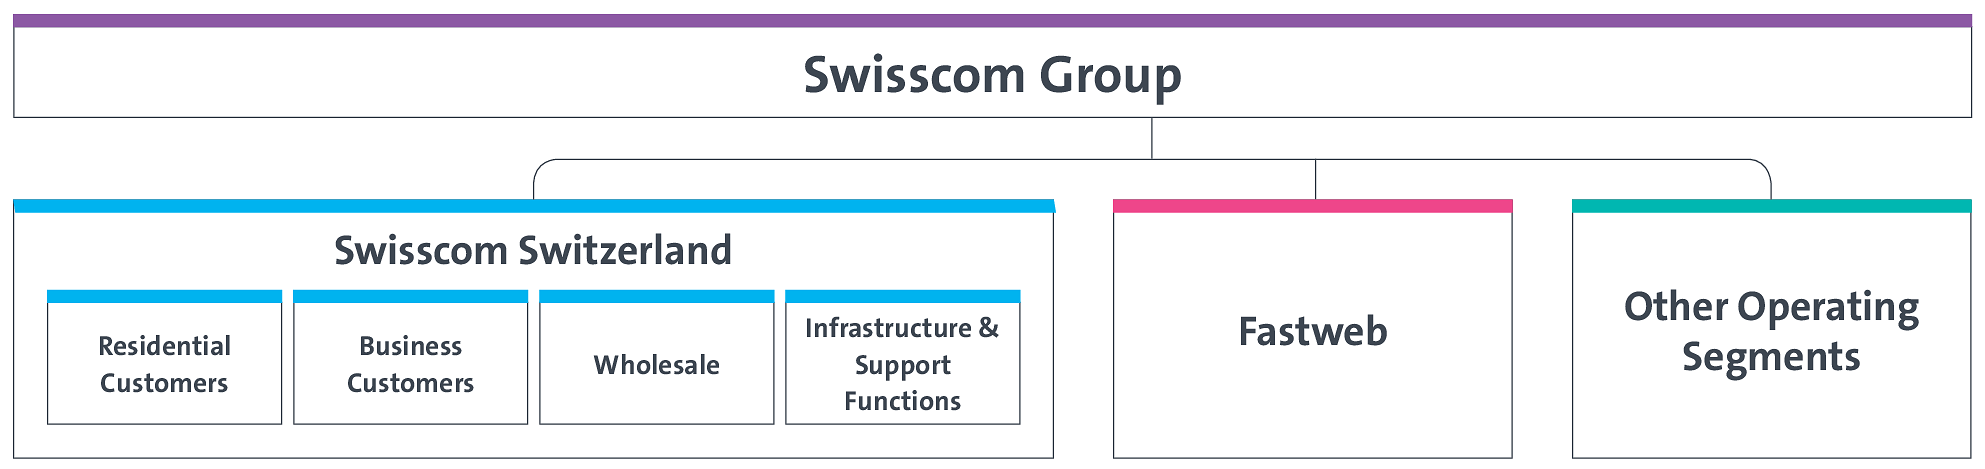 WSGE_DP_GR_Swisscom_Segmente